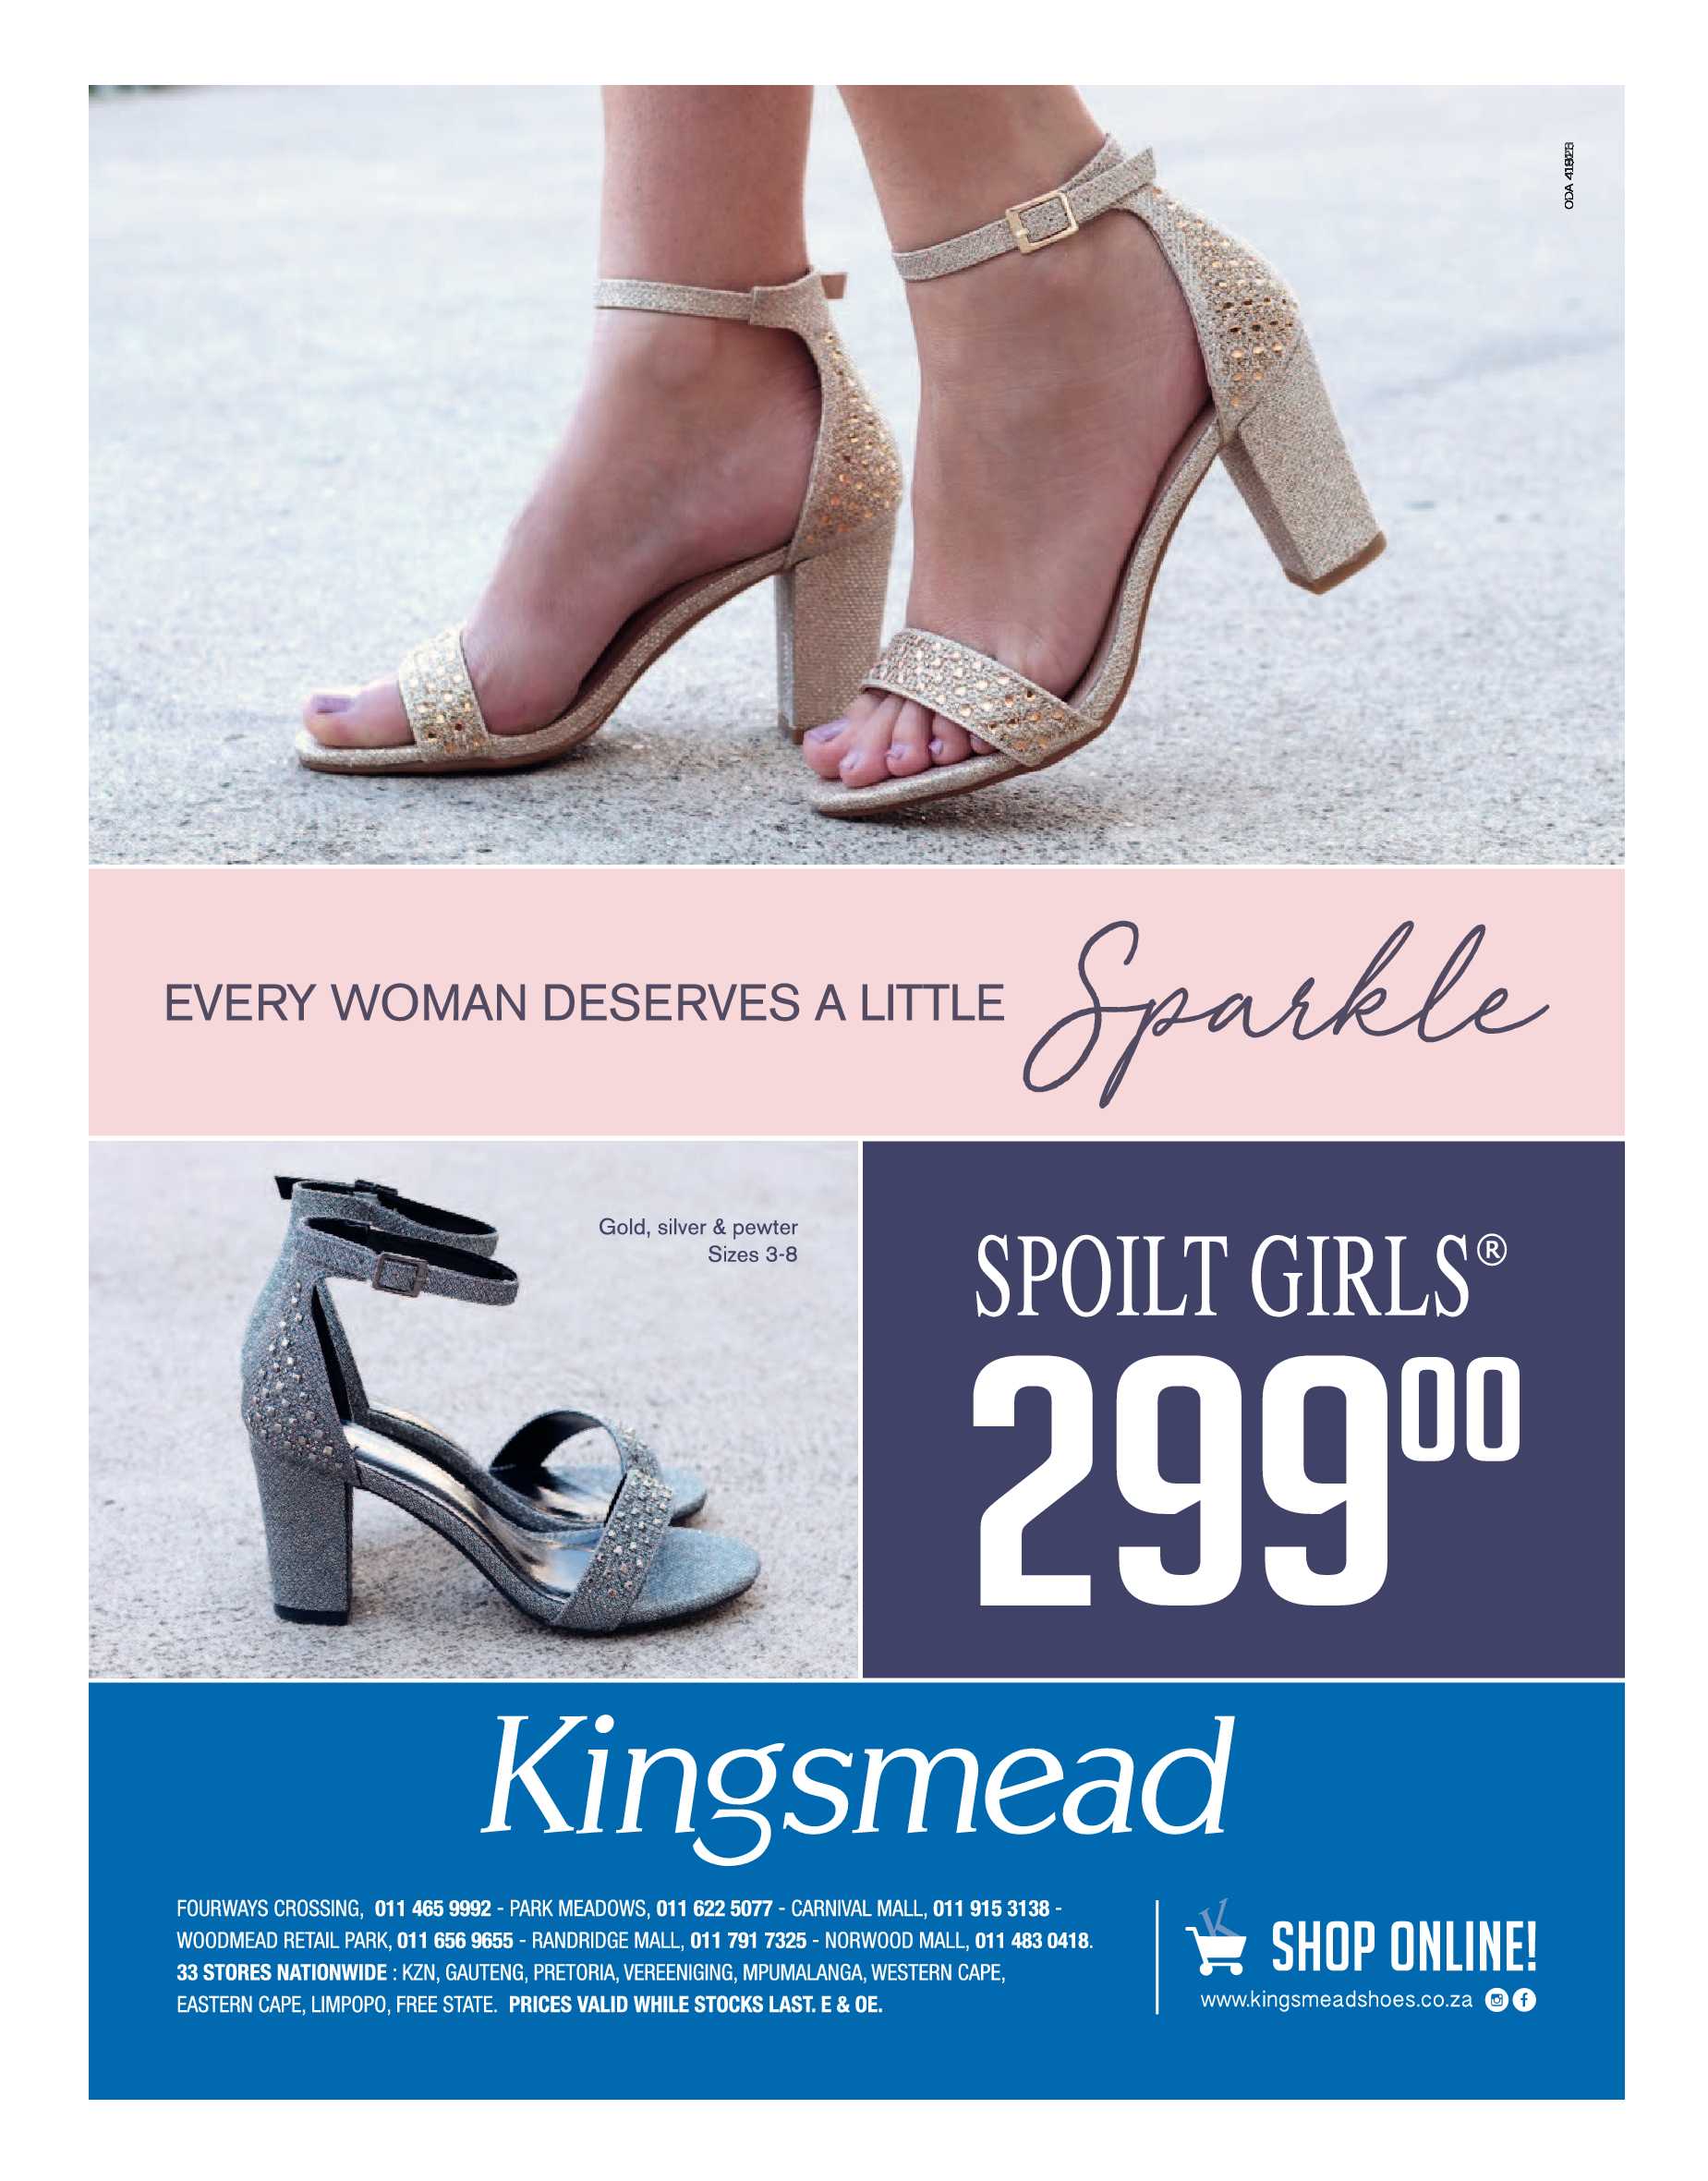 kingsmead shoes carnival mall